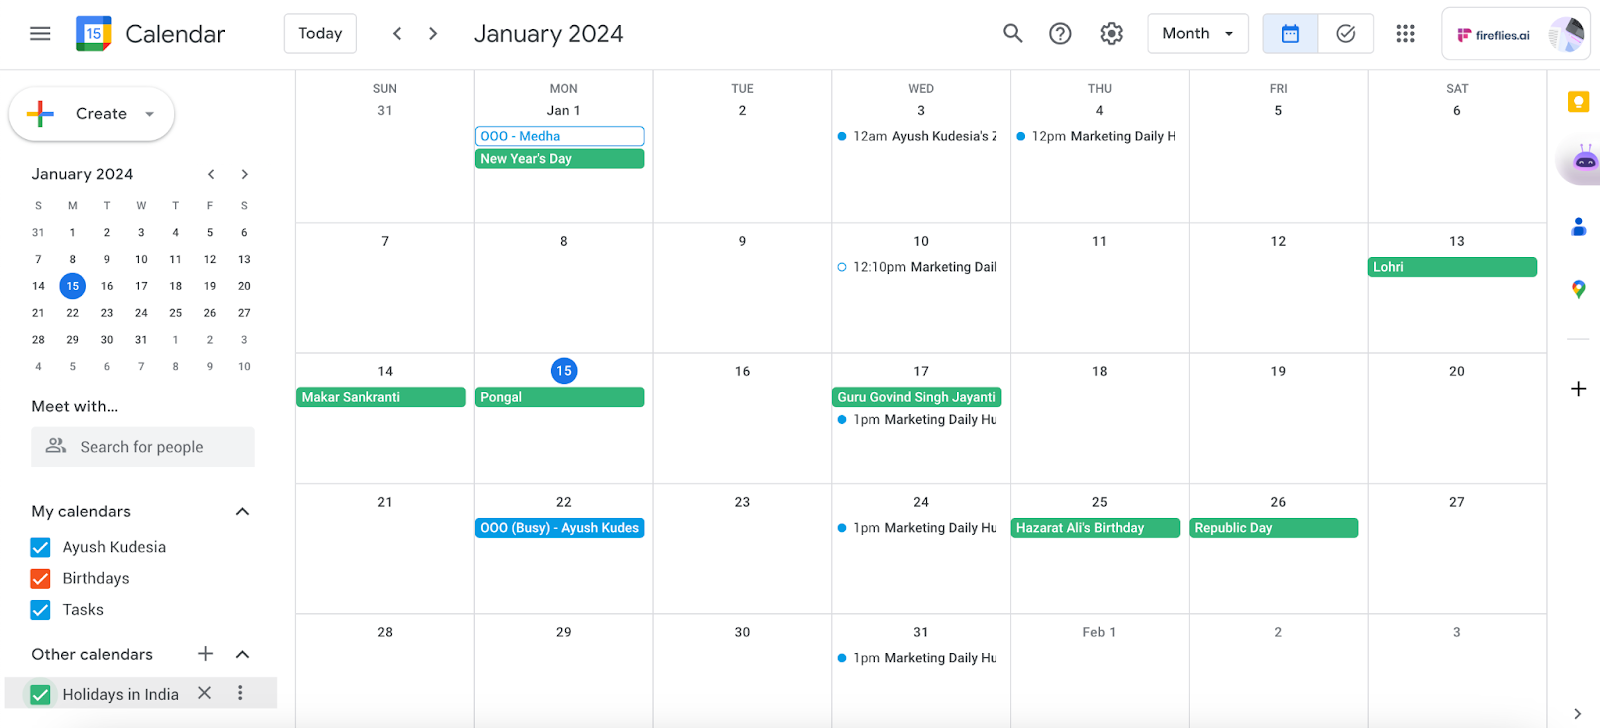 How to change the color scheme in Google Calendar - On desktop